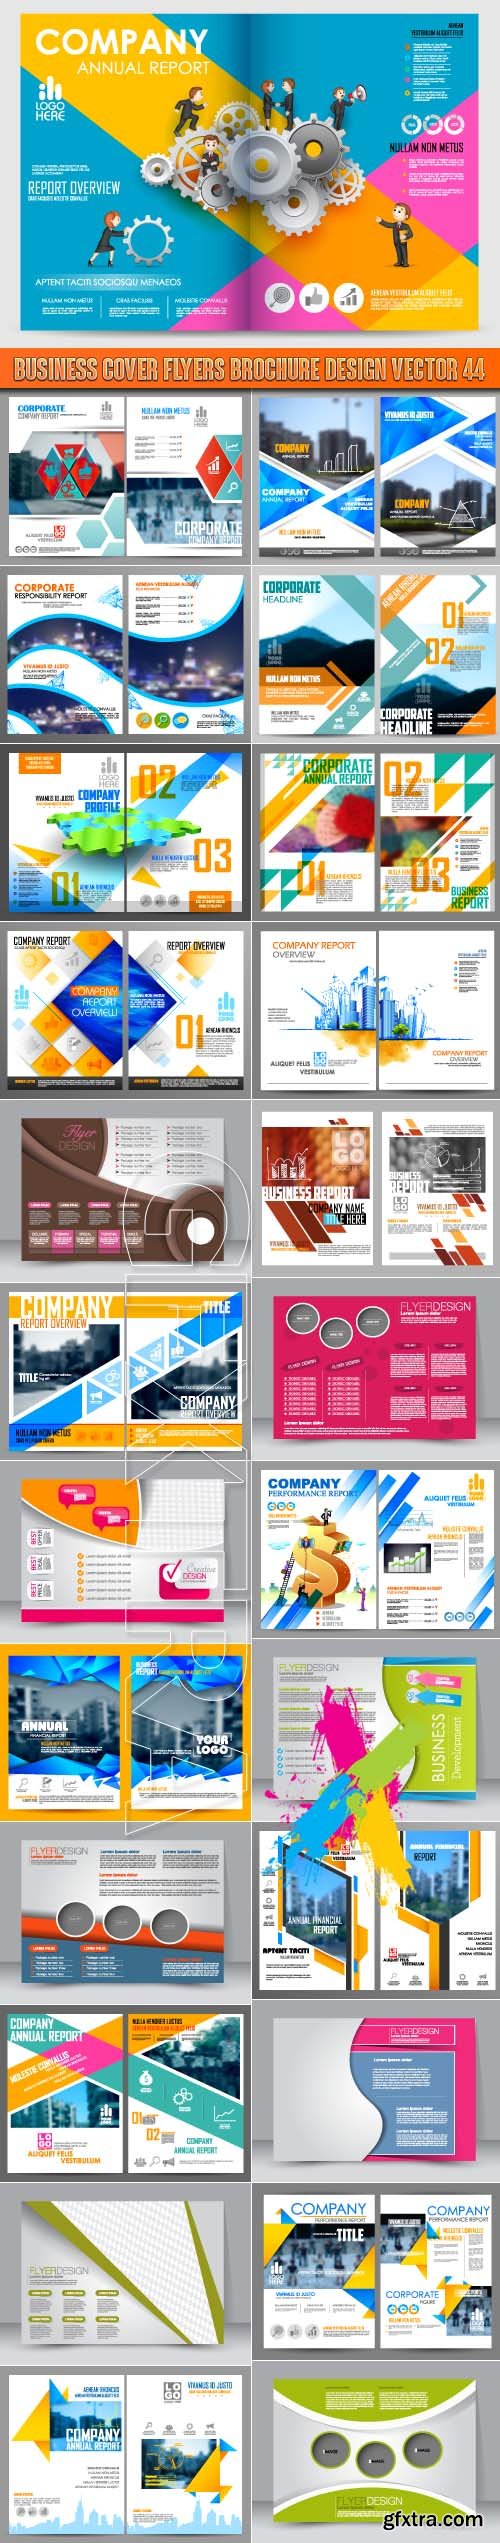 Business cover flyers brochure design vector 44